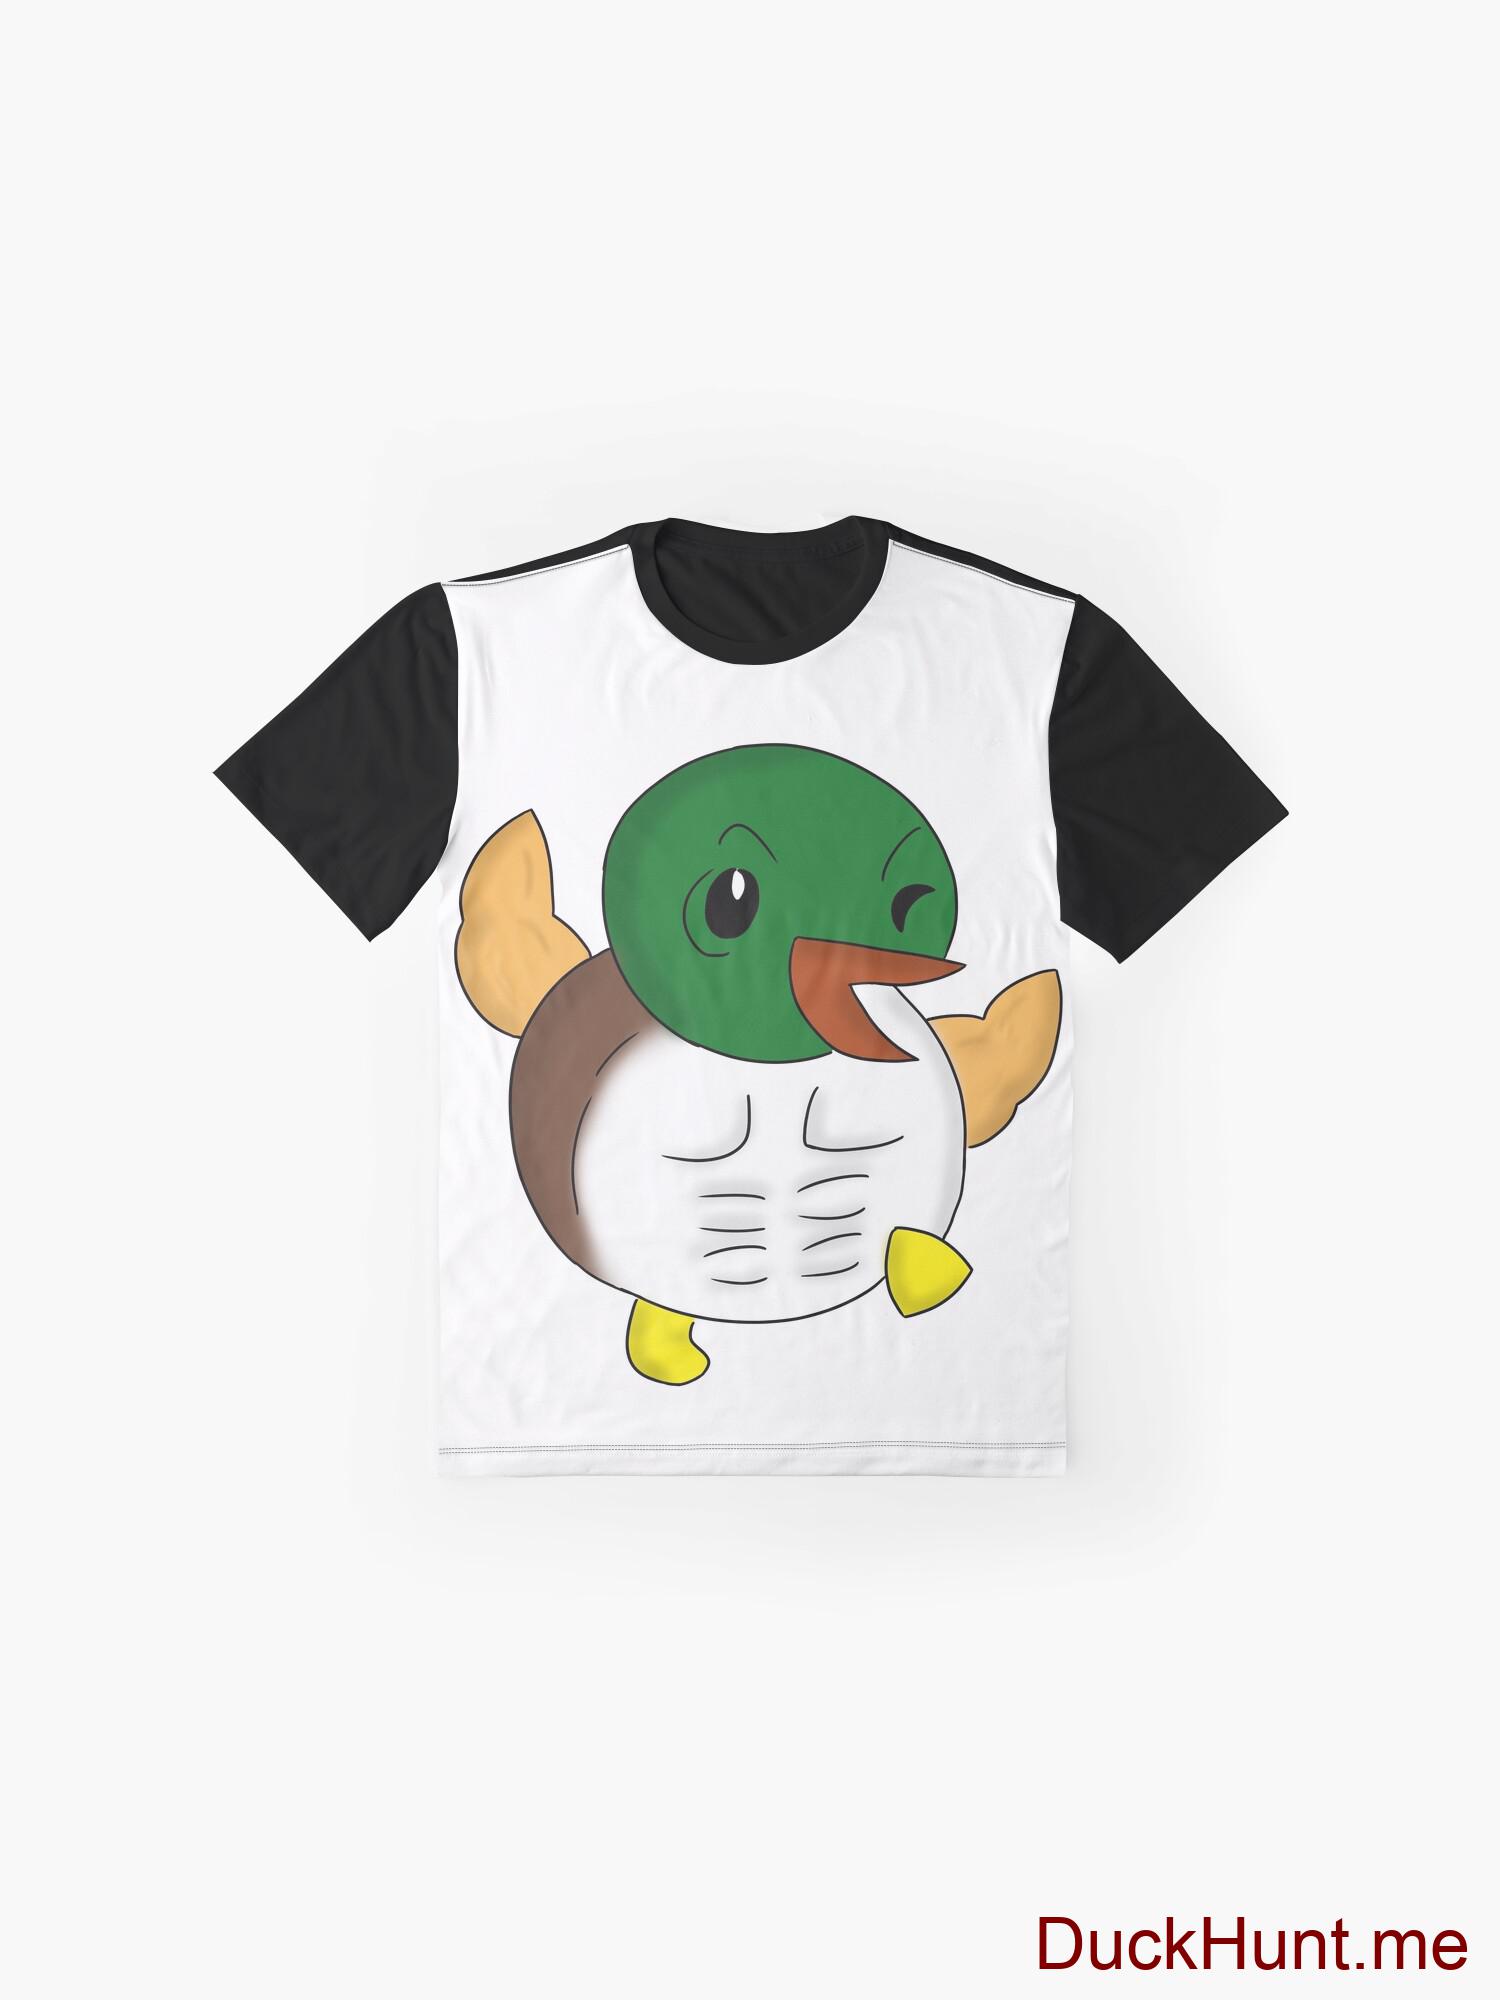 Super duck Black Graphic T-Shirt alternative image 3